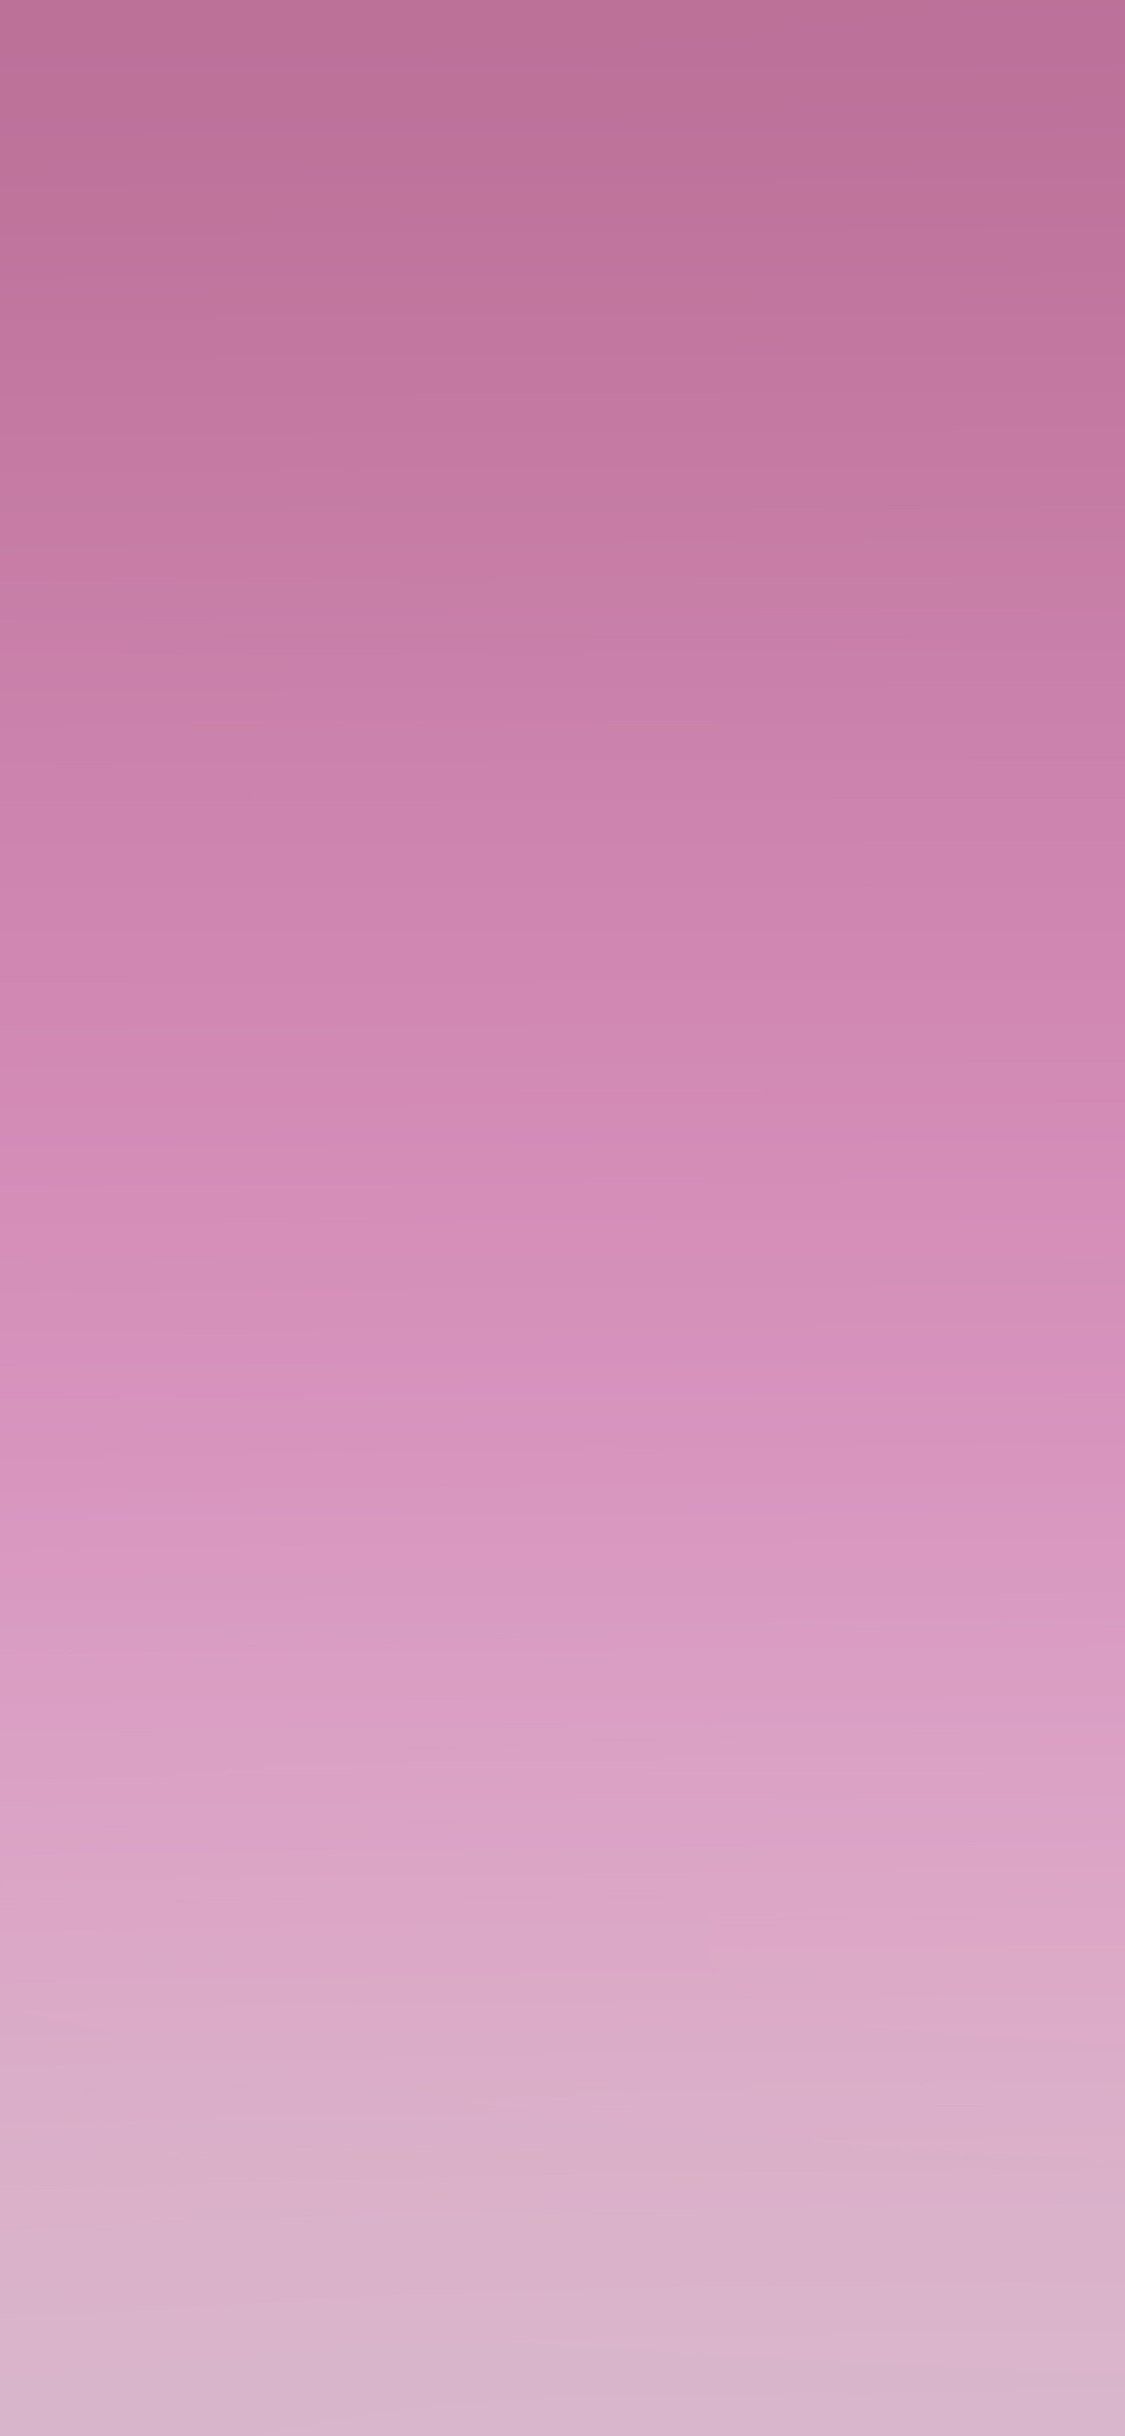 Pink Pastel Wallpaper iPhone Soft Pink Wallpaper 183 Pink HD Wallpaper iPhone